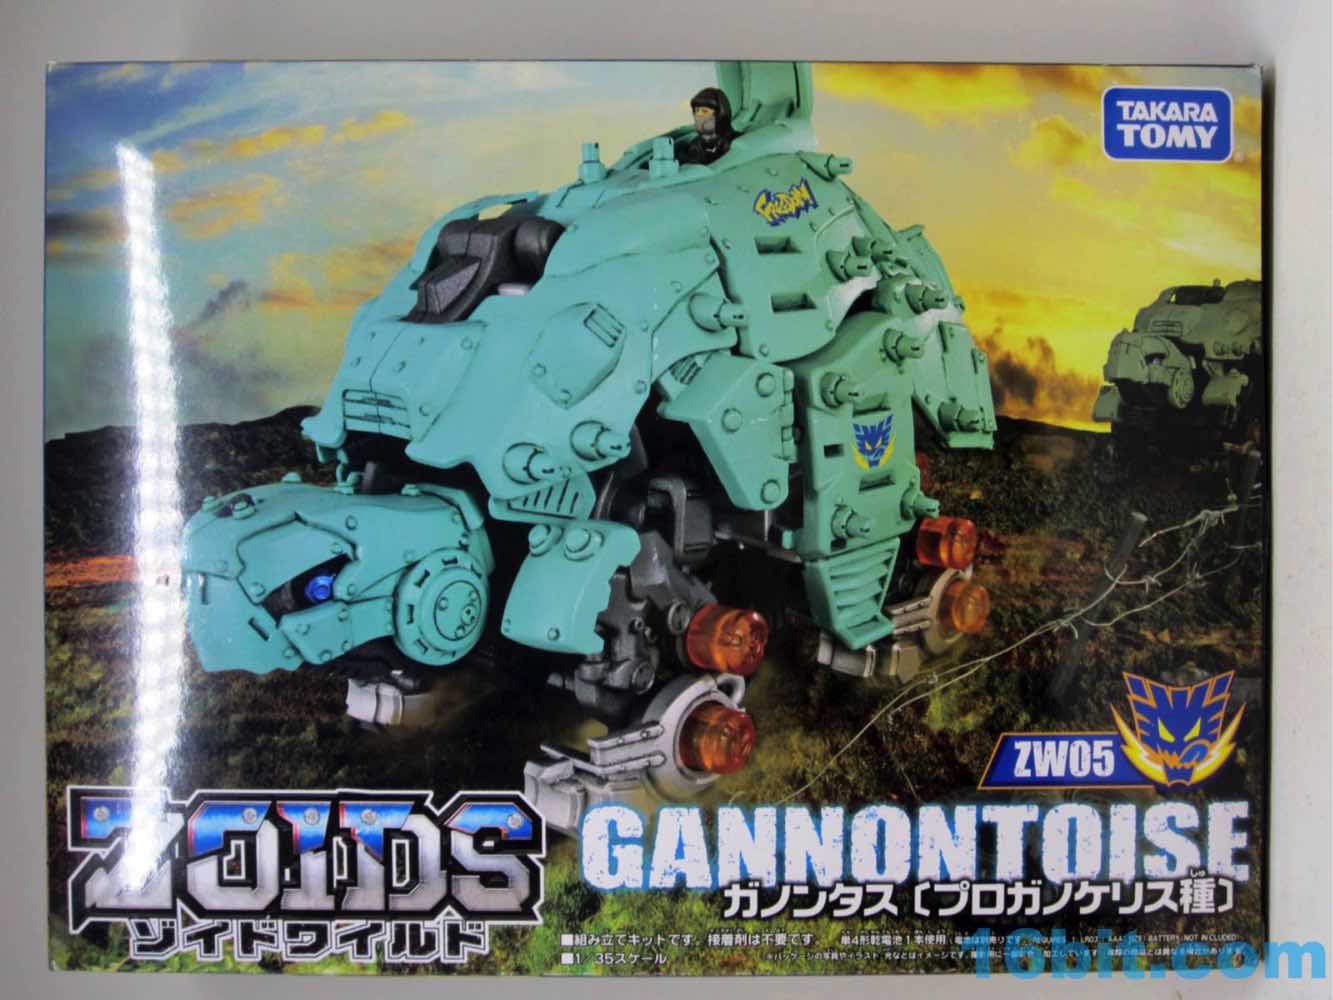 Takara Tomy Zoids Wild Gannontoise Zw05 for sale online 